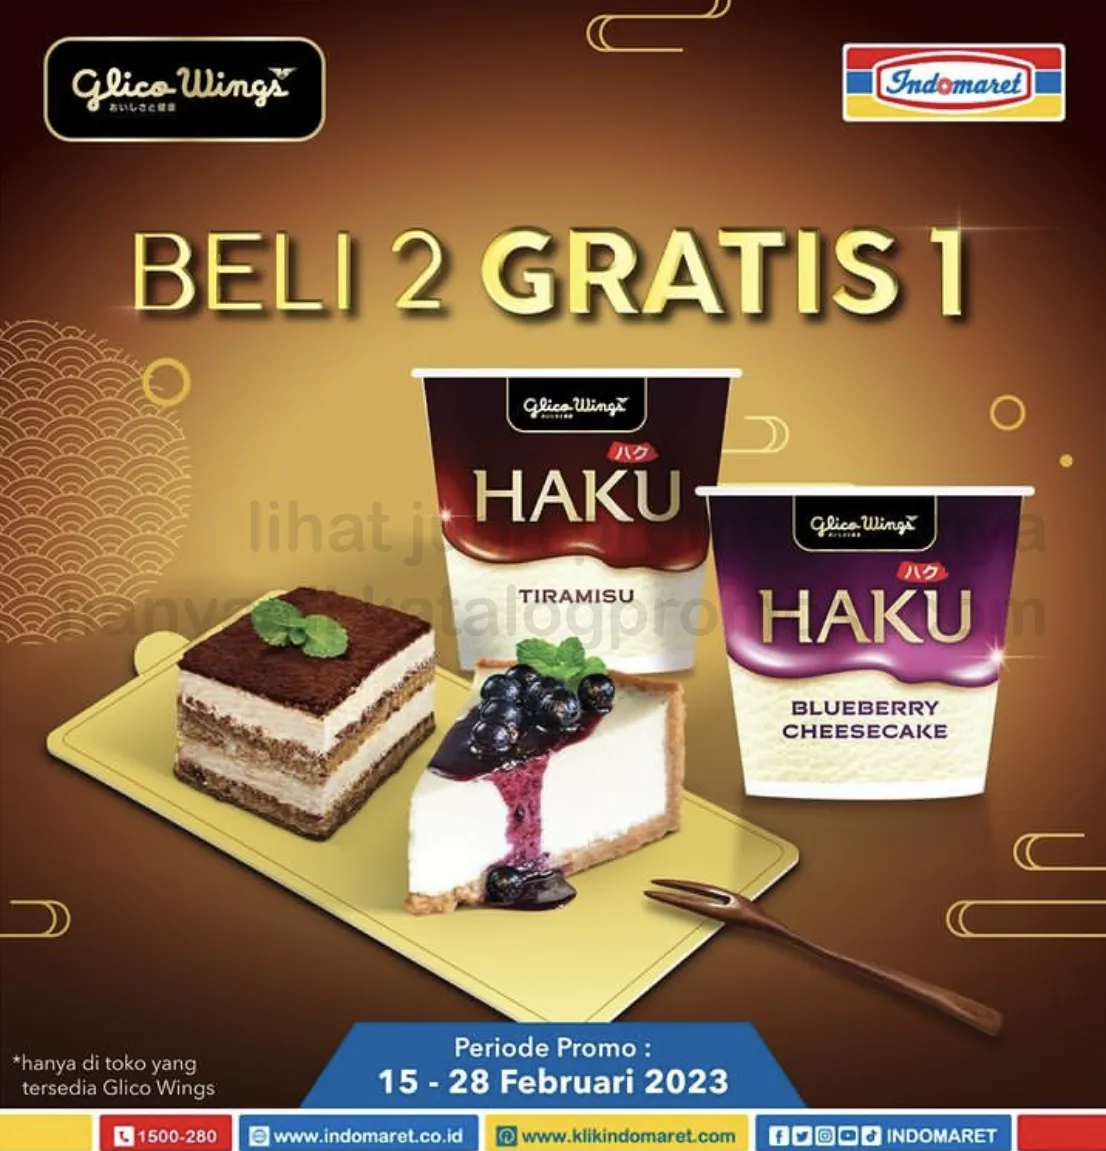 Promo INDOMARET BELI 2 GRATIS 1 untuk HAKU Blueberry Cheesecake & Tiramisu